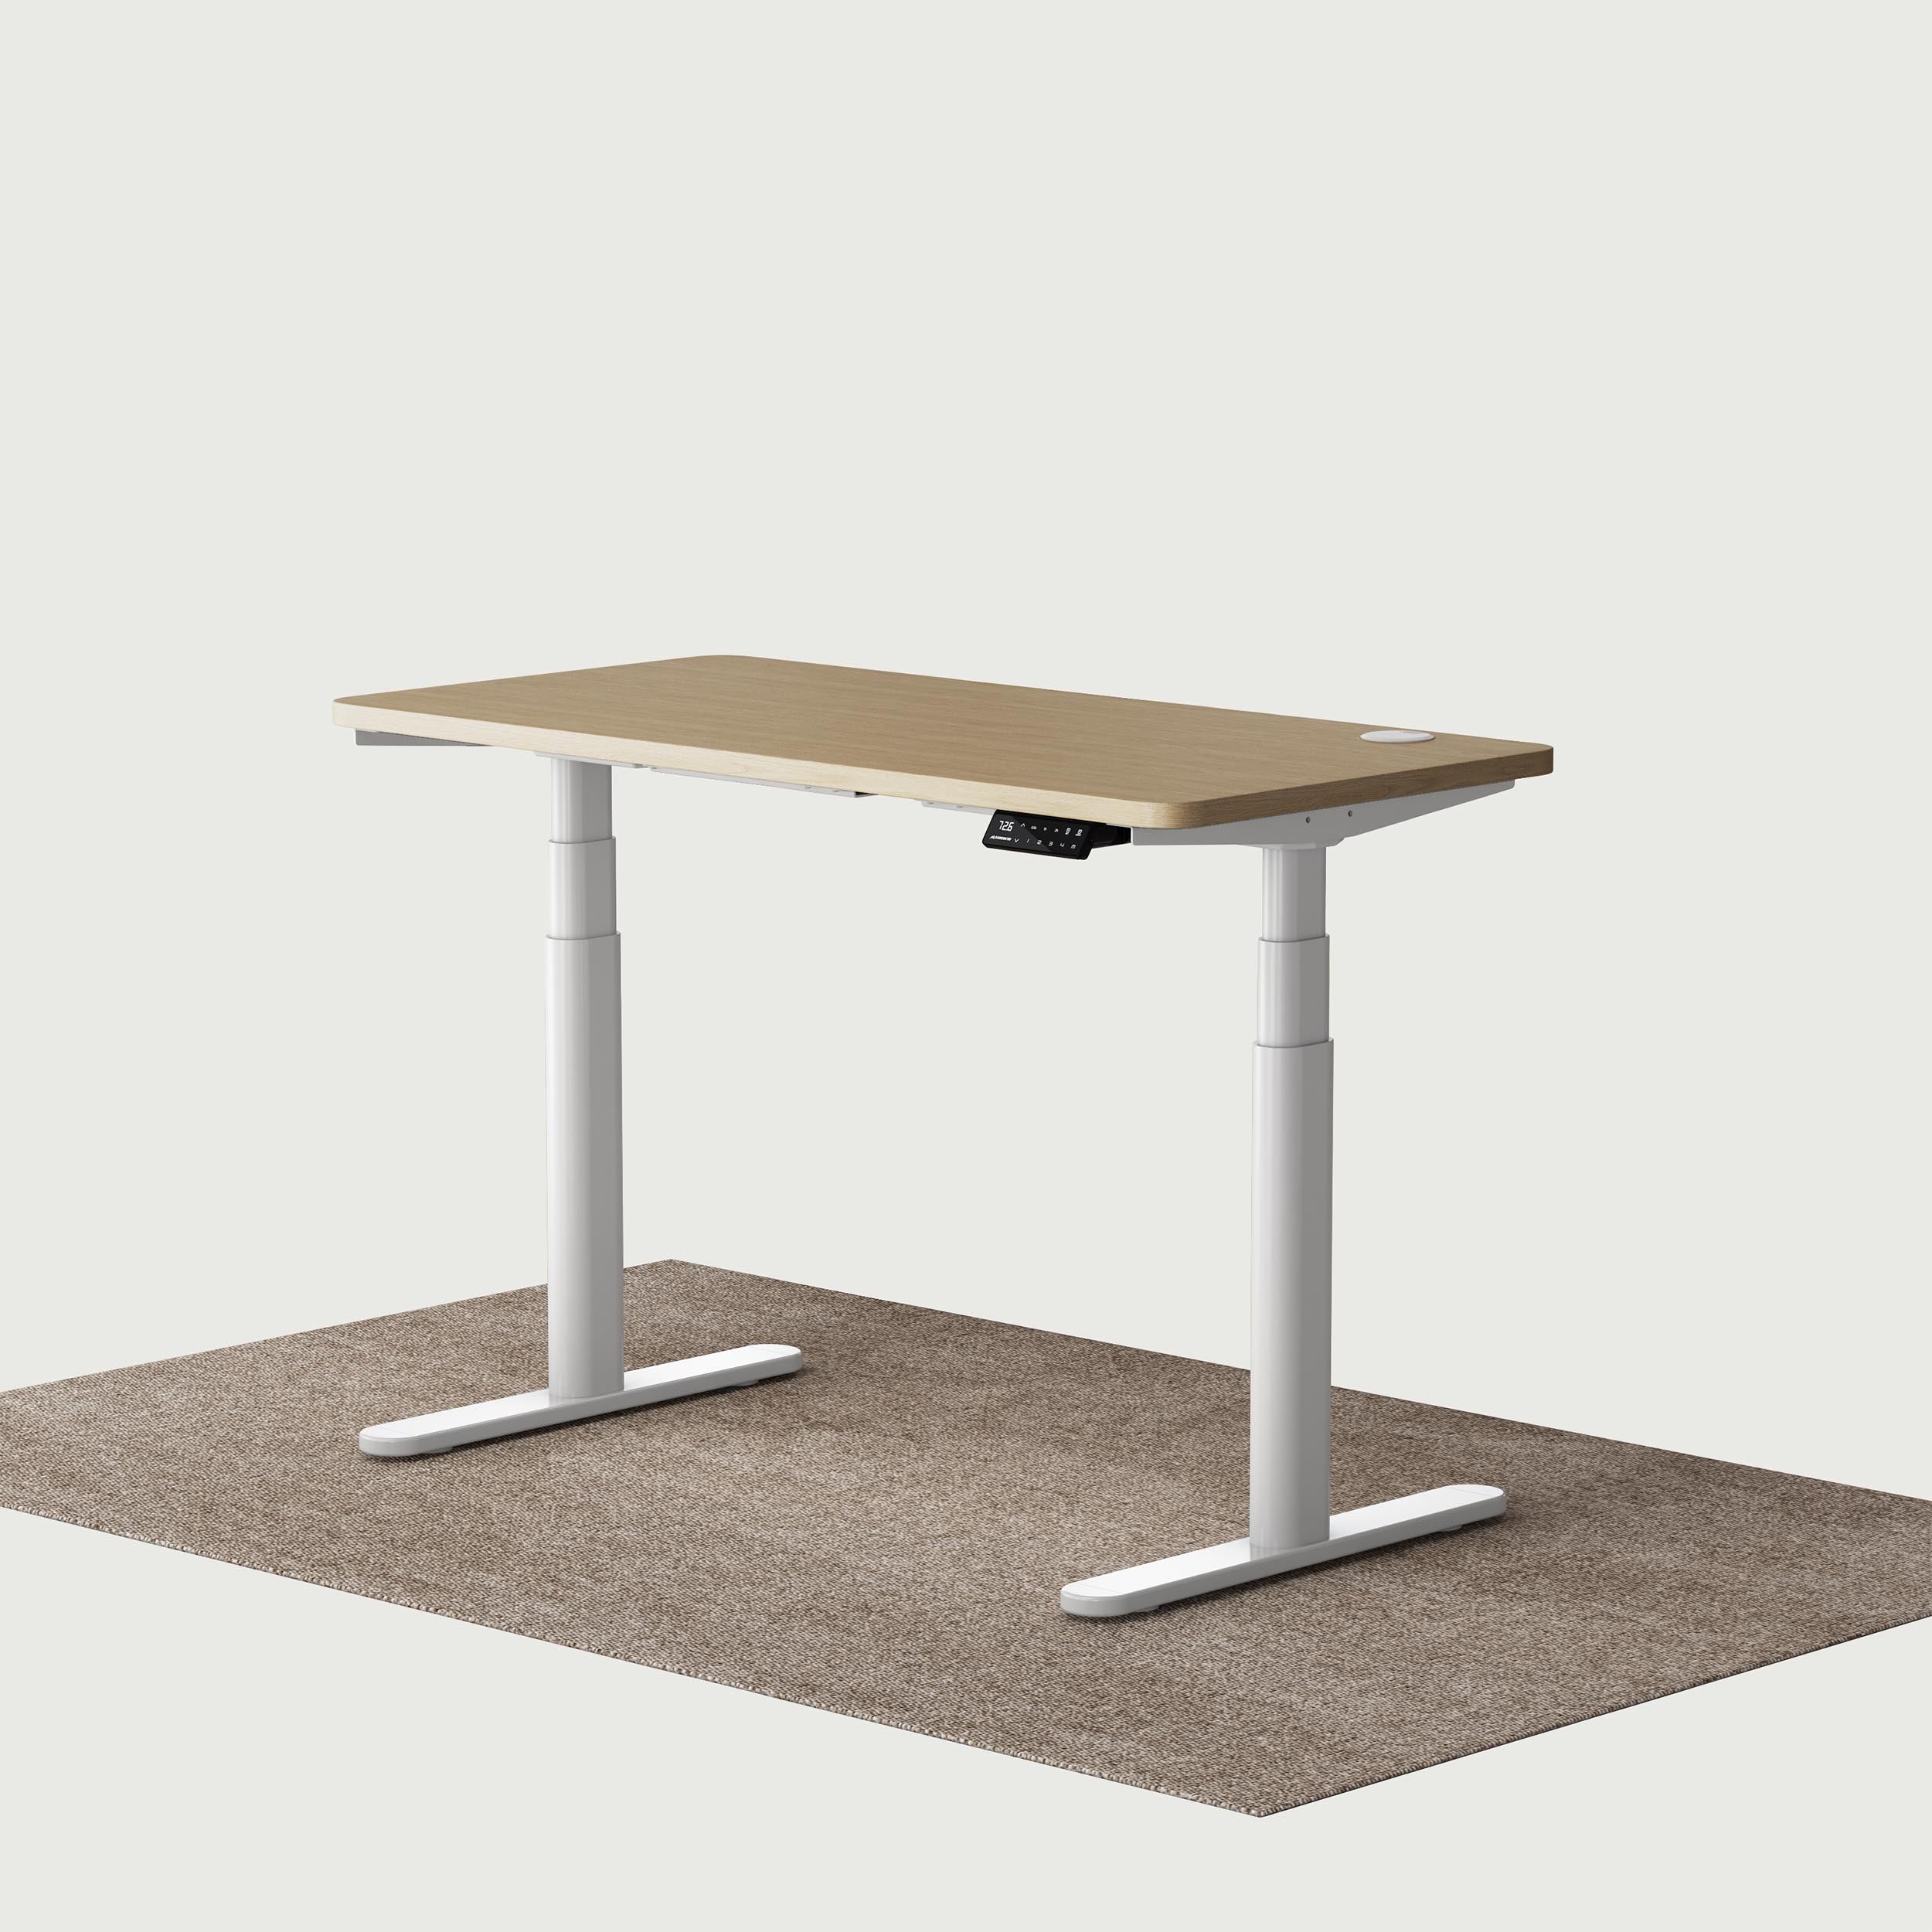 TH2 Pro Plus white oval electric standing desk frame with oak 120x60 cm desktop